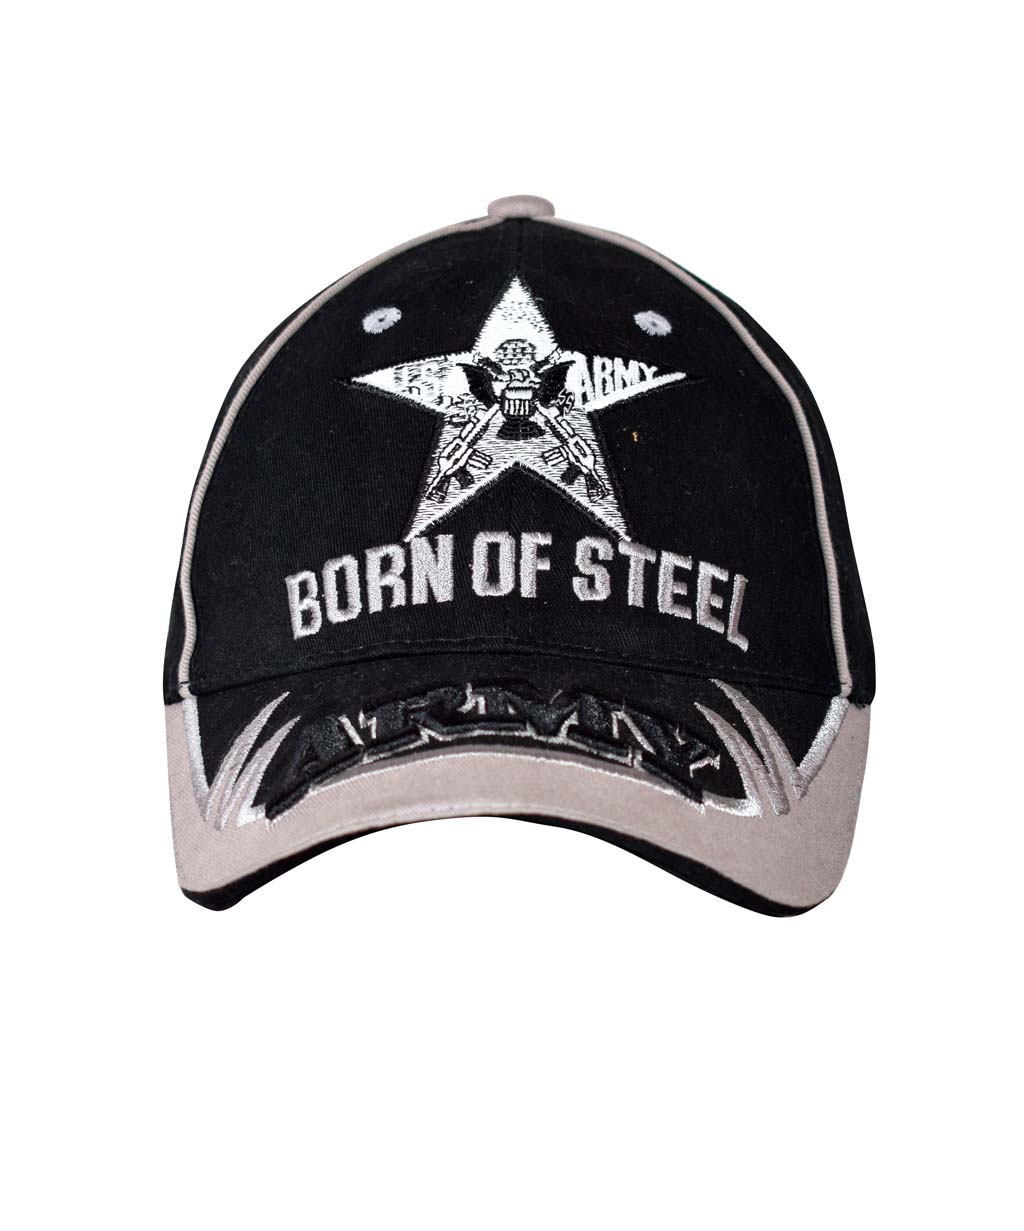 Бейсболка EC ARMY BORN OF STEEL black (5546) 